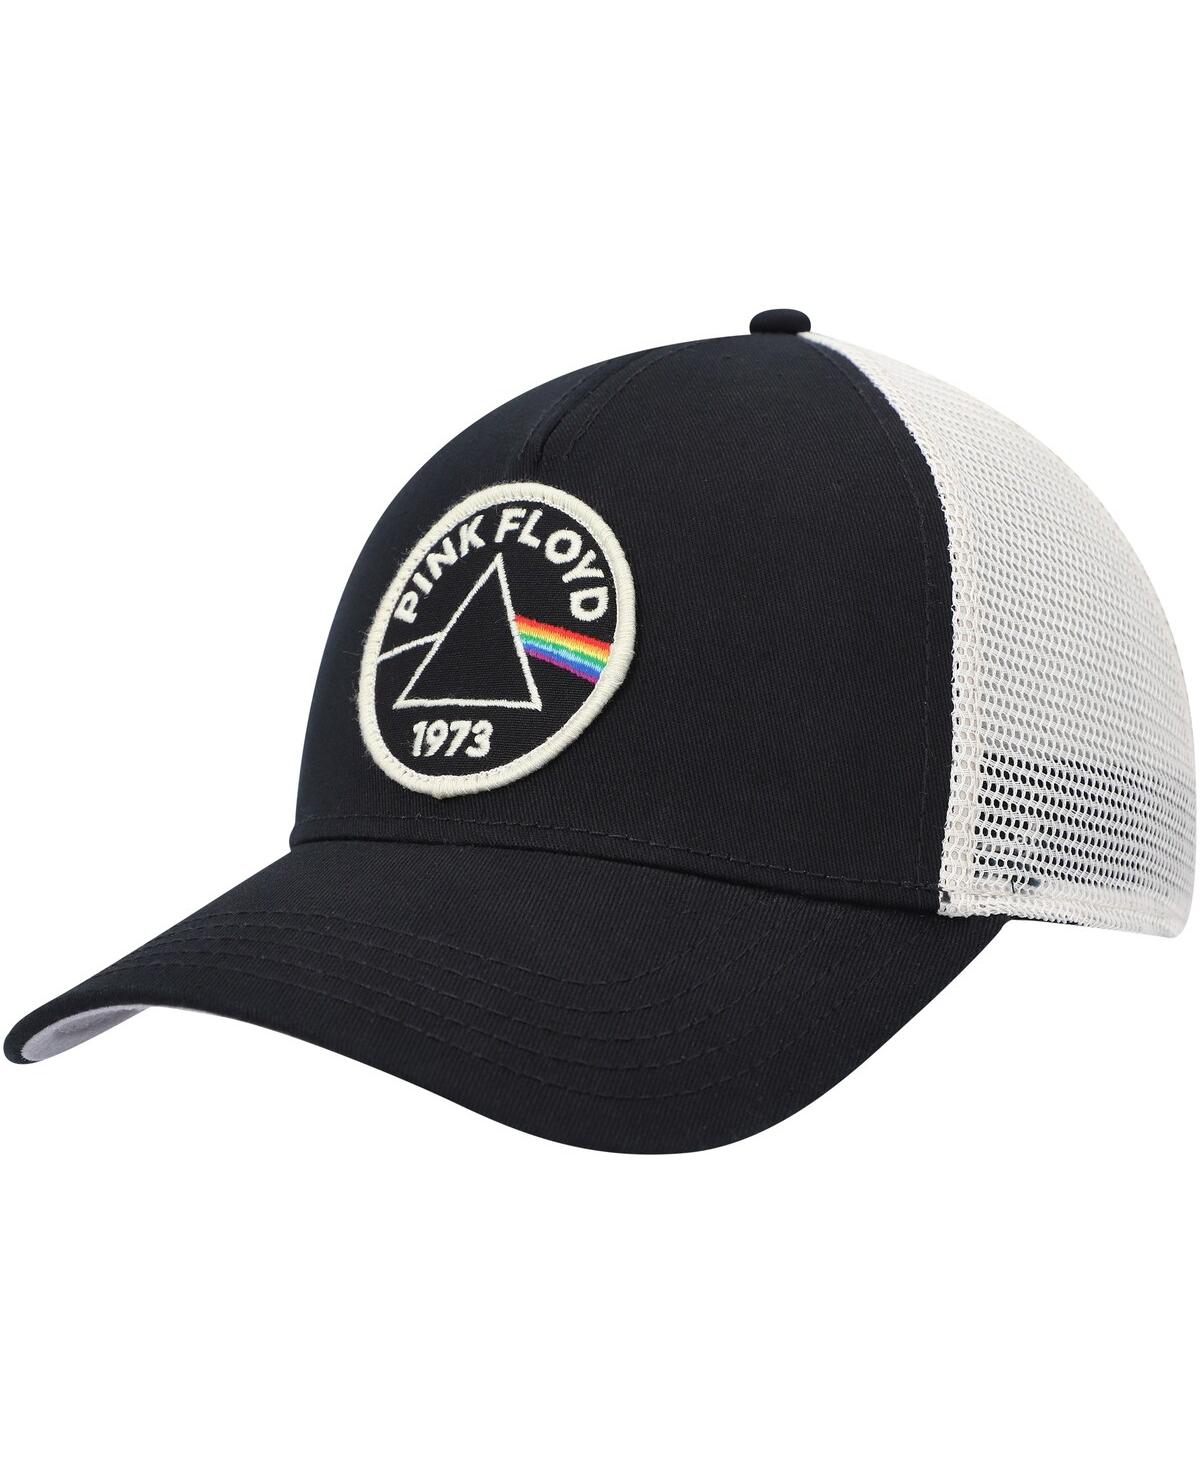 Men's American Needle Black, Cream Pink Floyd Valin Trucker Snapback Hat - Black, Cream